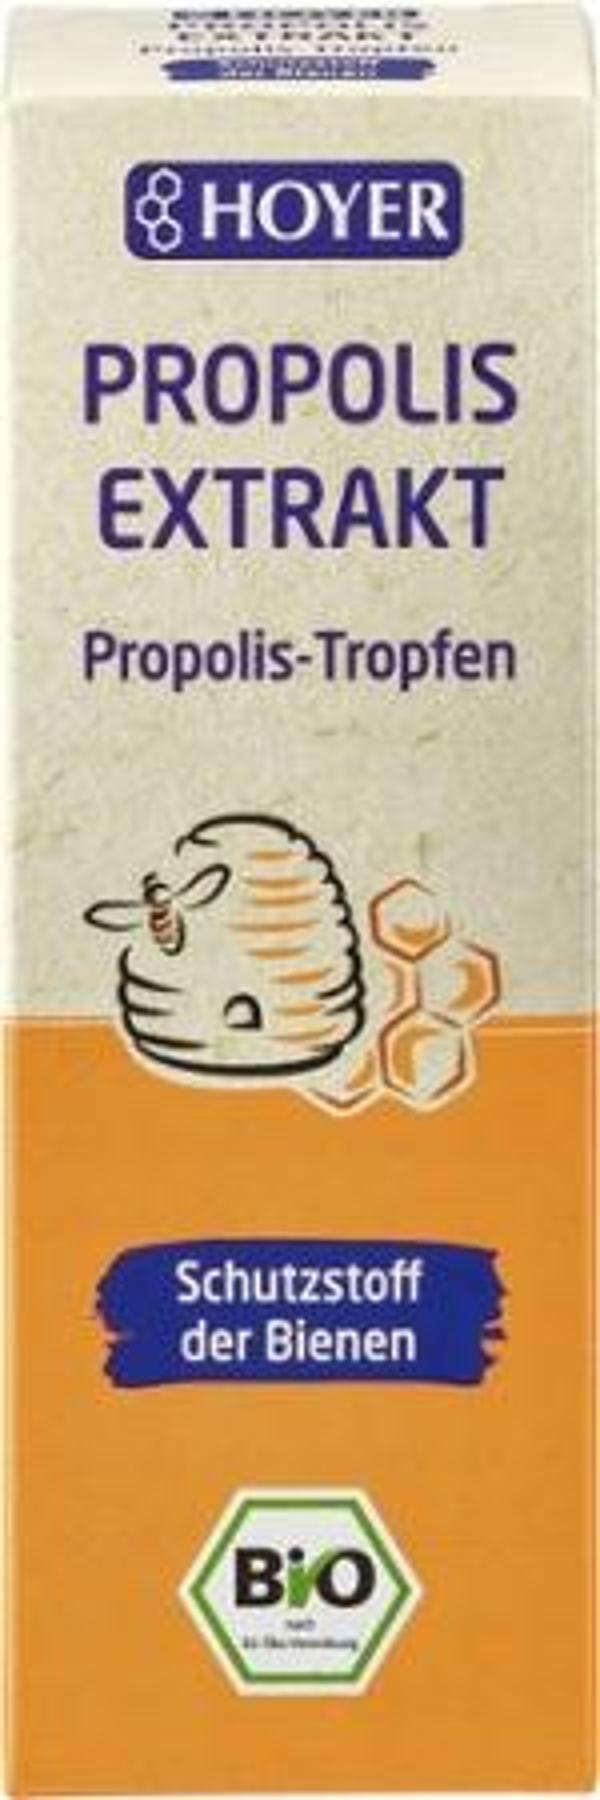 Produktfoto zu Propolis Extrakt flüssig